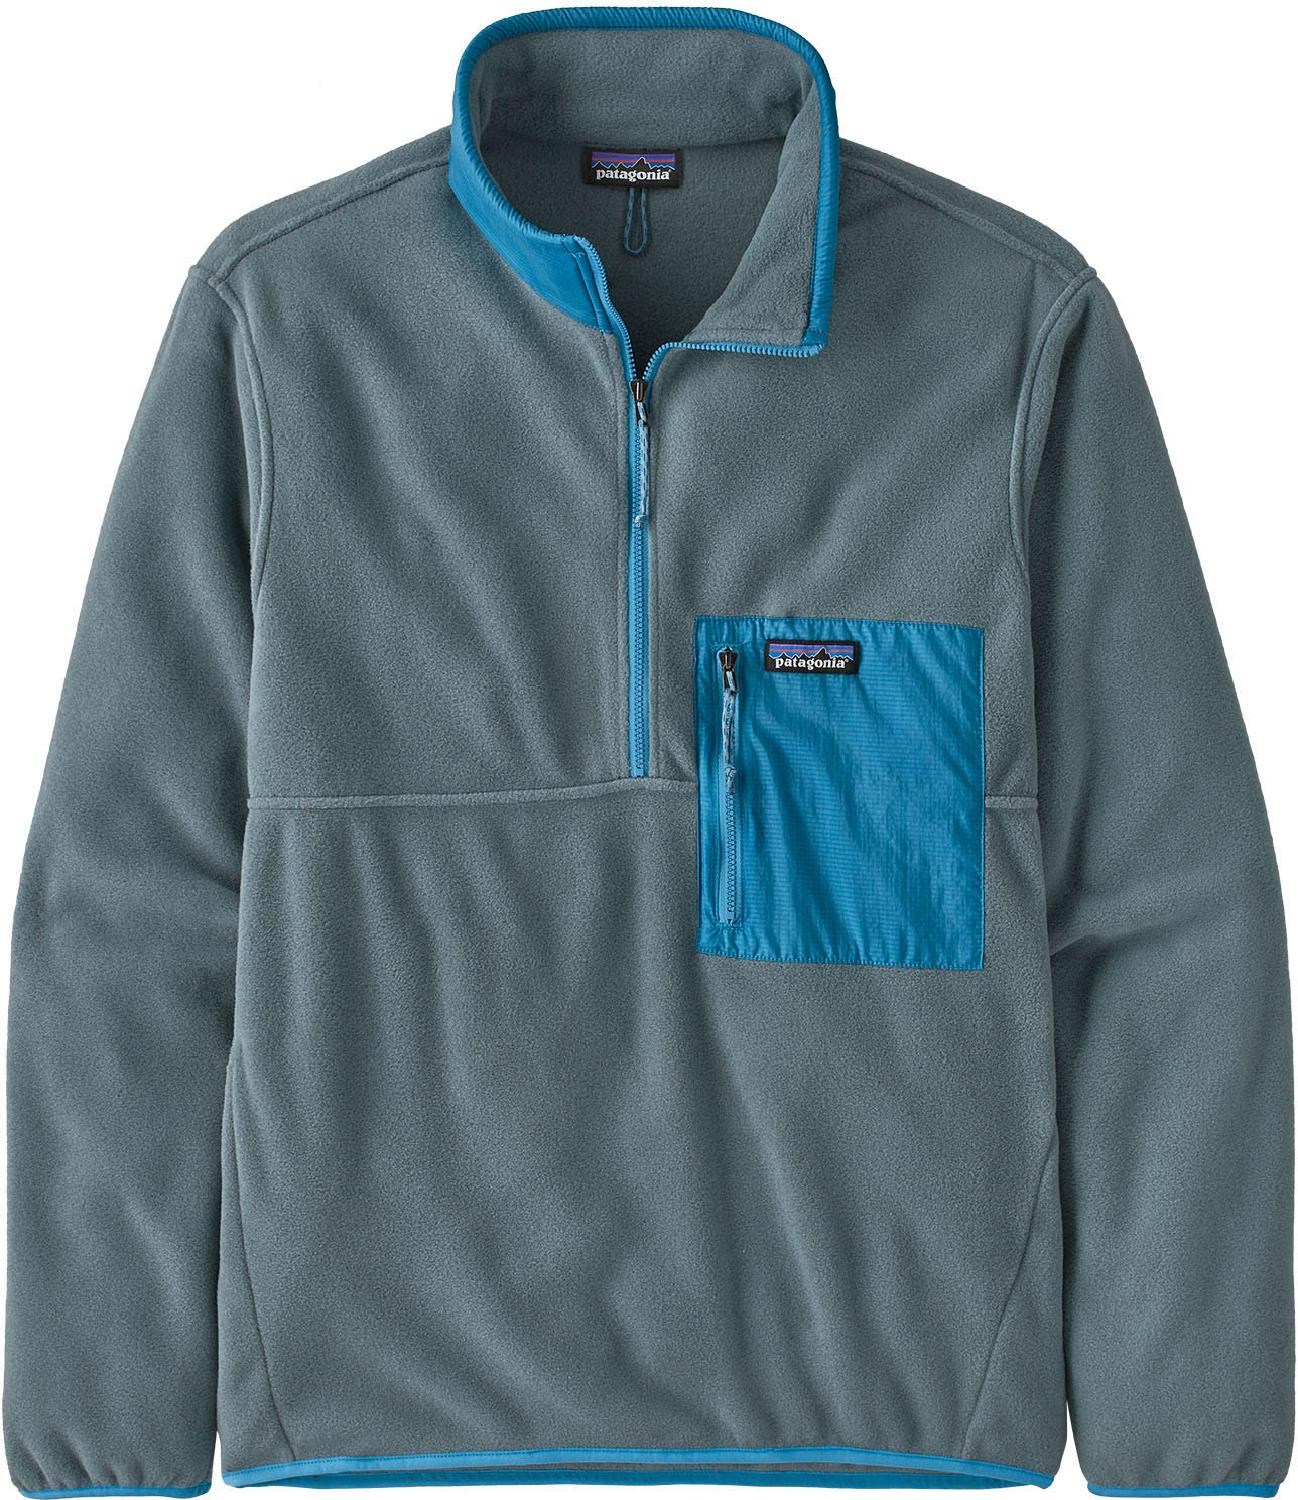 Пуловер Microdini с молнией до половины - мужской Patagonia, серый брюки джоггеры micro d женские patagonia синий